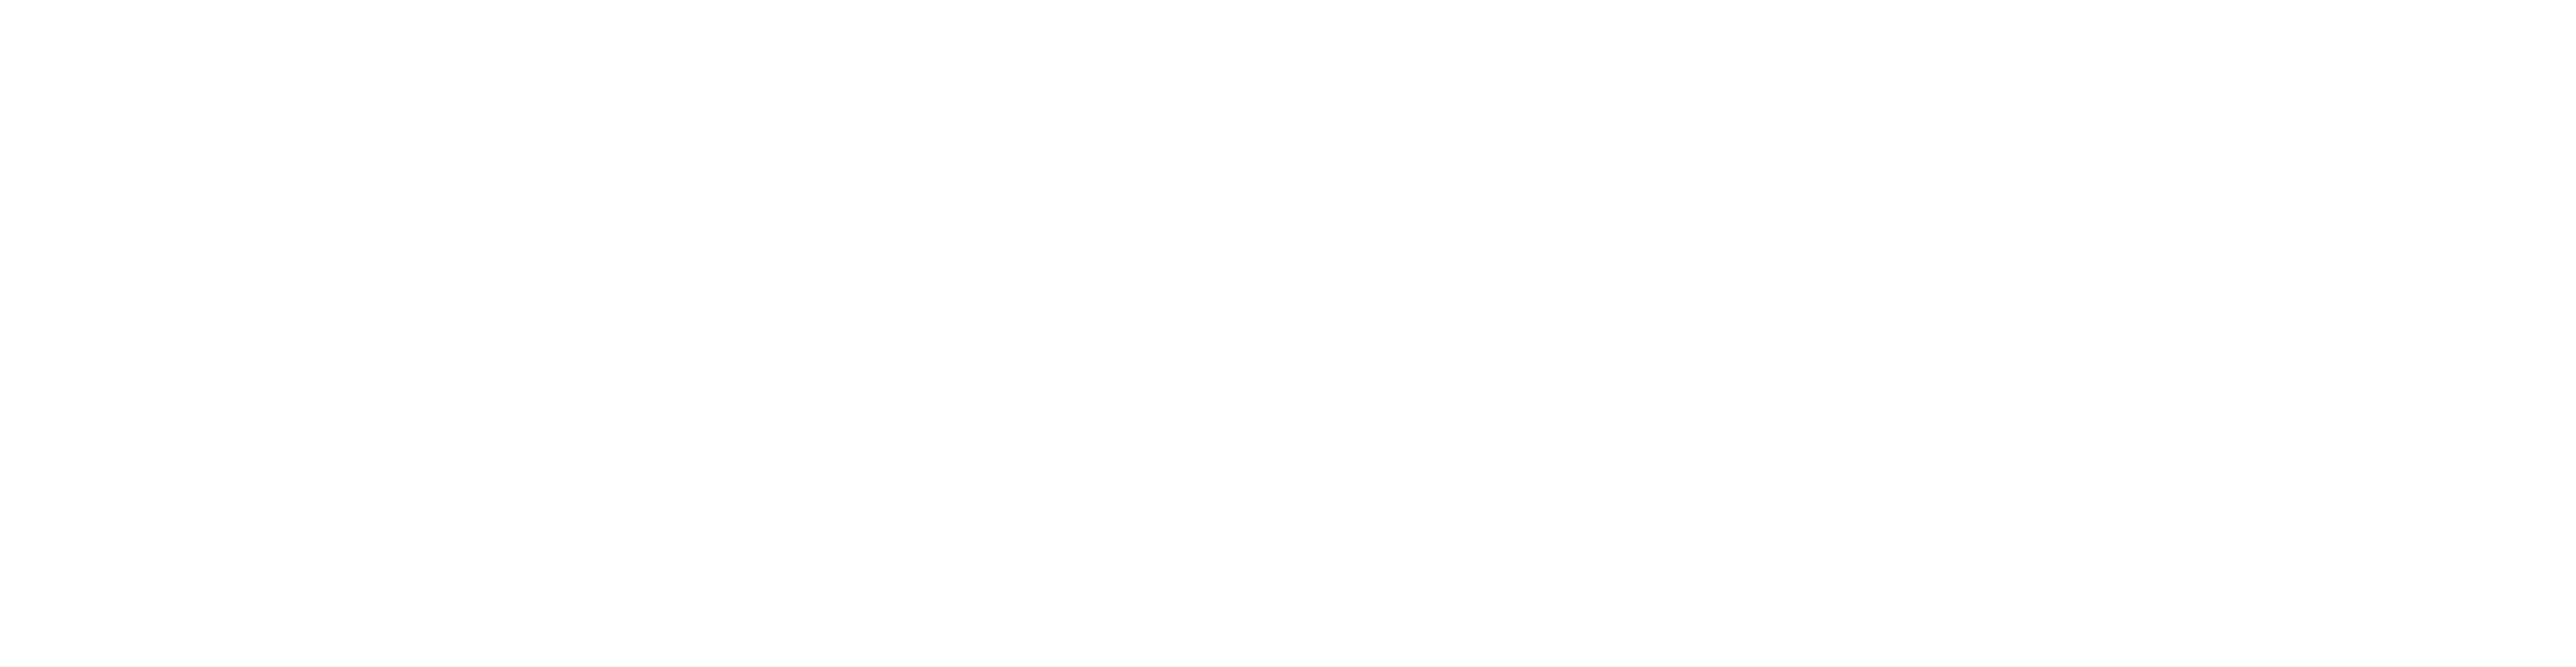 advisupply student consulting